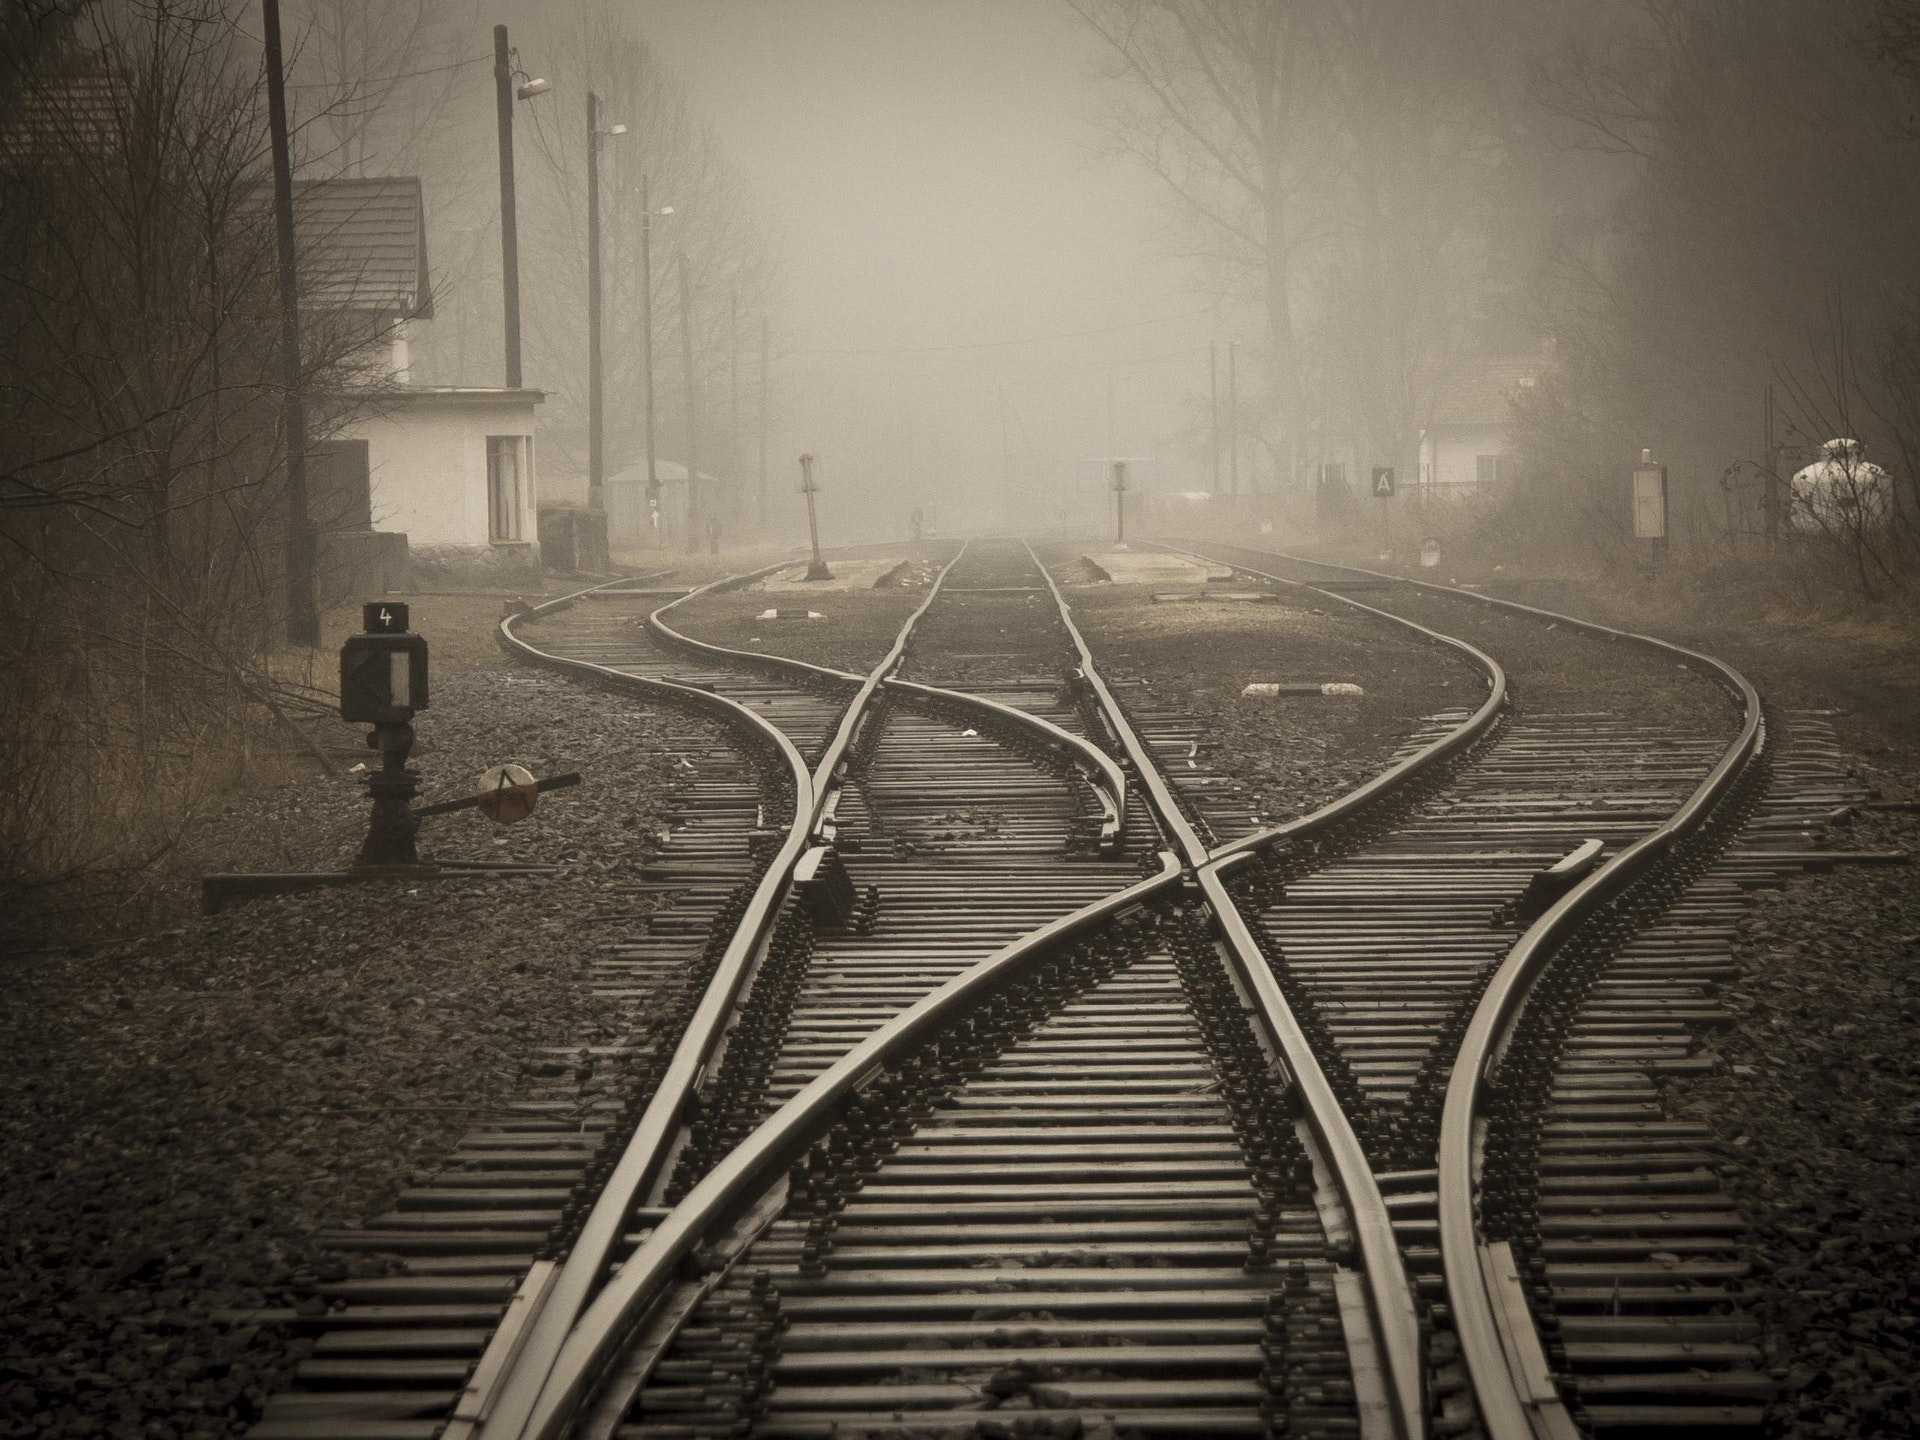 Photo by Pixabay: https://www.pexels.com/photo/railroad-tracks-in-city-258510/